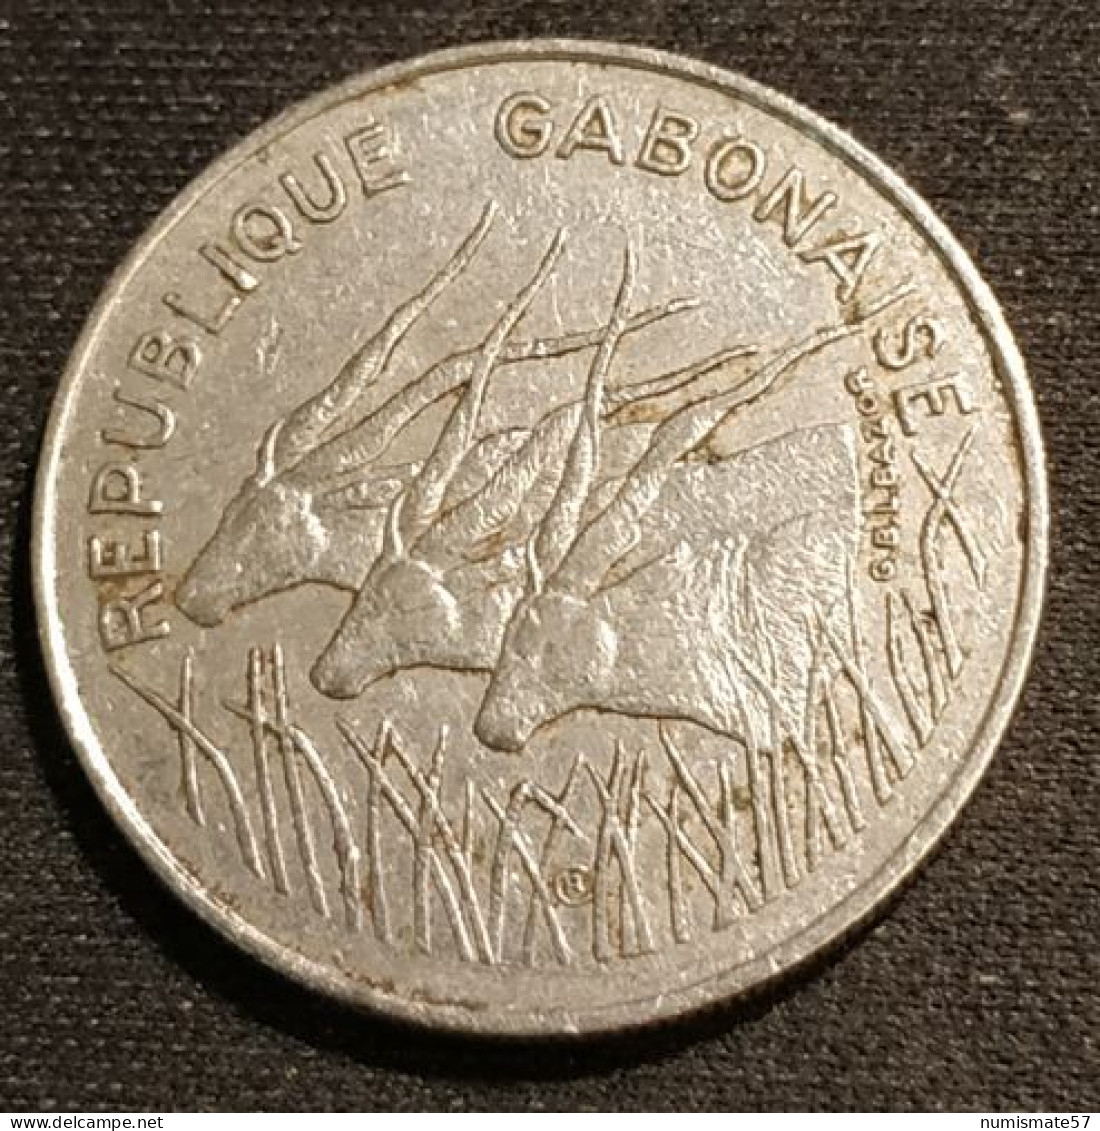 RARE - GABON - 100 FRANCS 1971 - KM 12 - Gabon